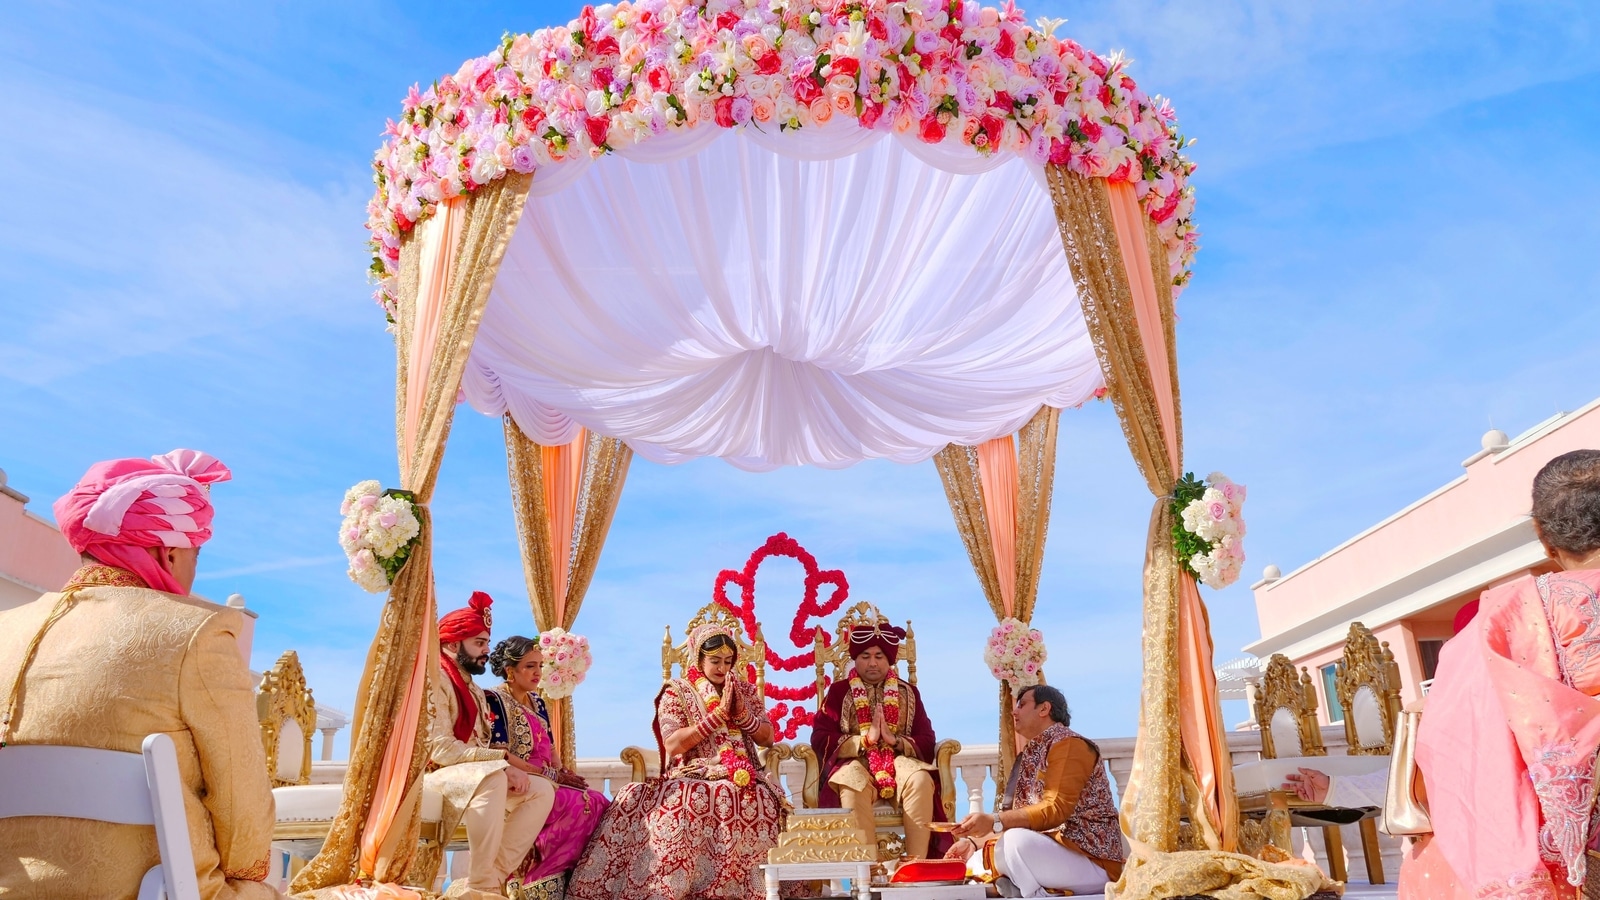 5 latest trendy wedding decor ideas from across India | Hindustan ...